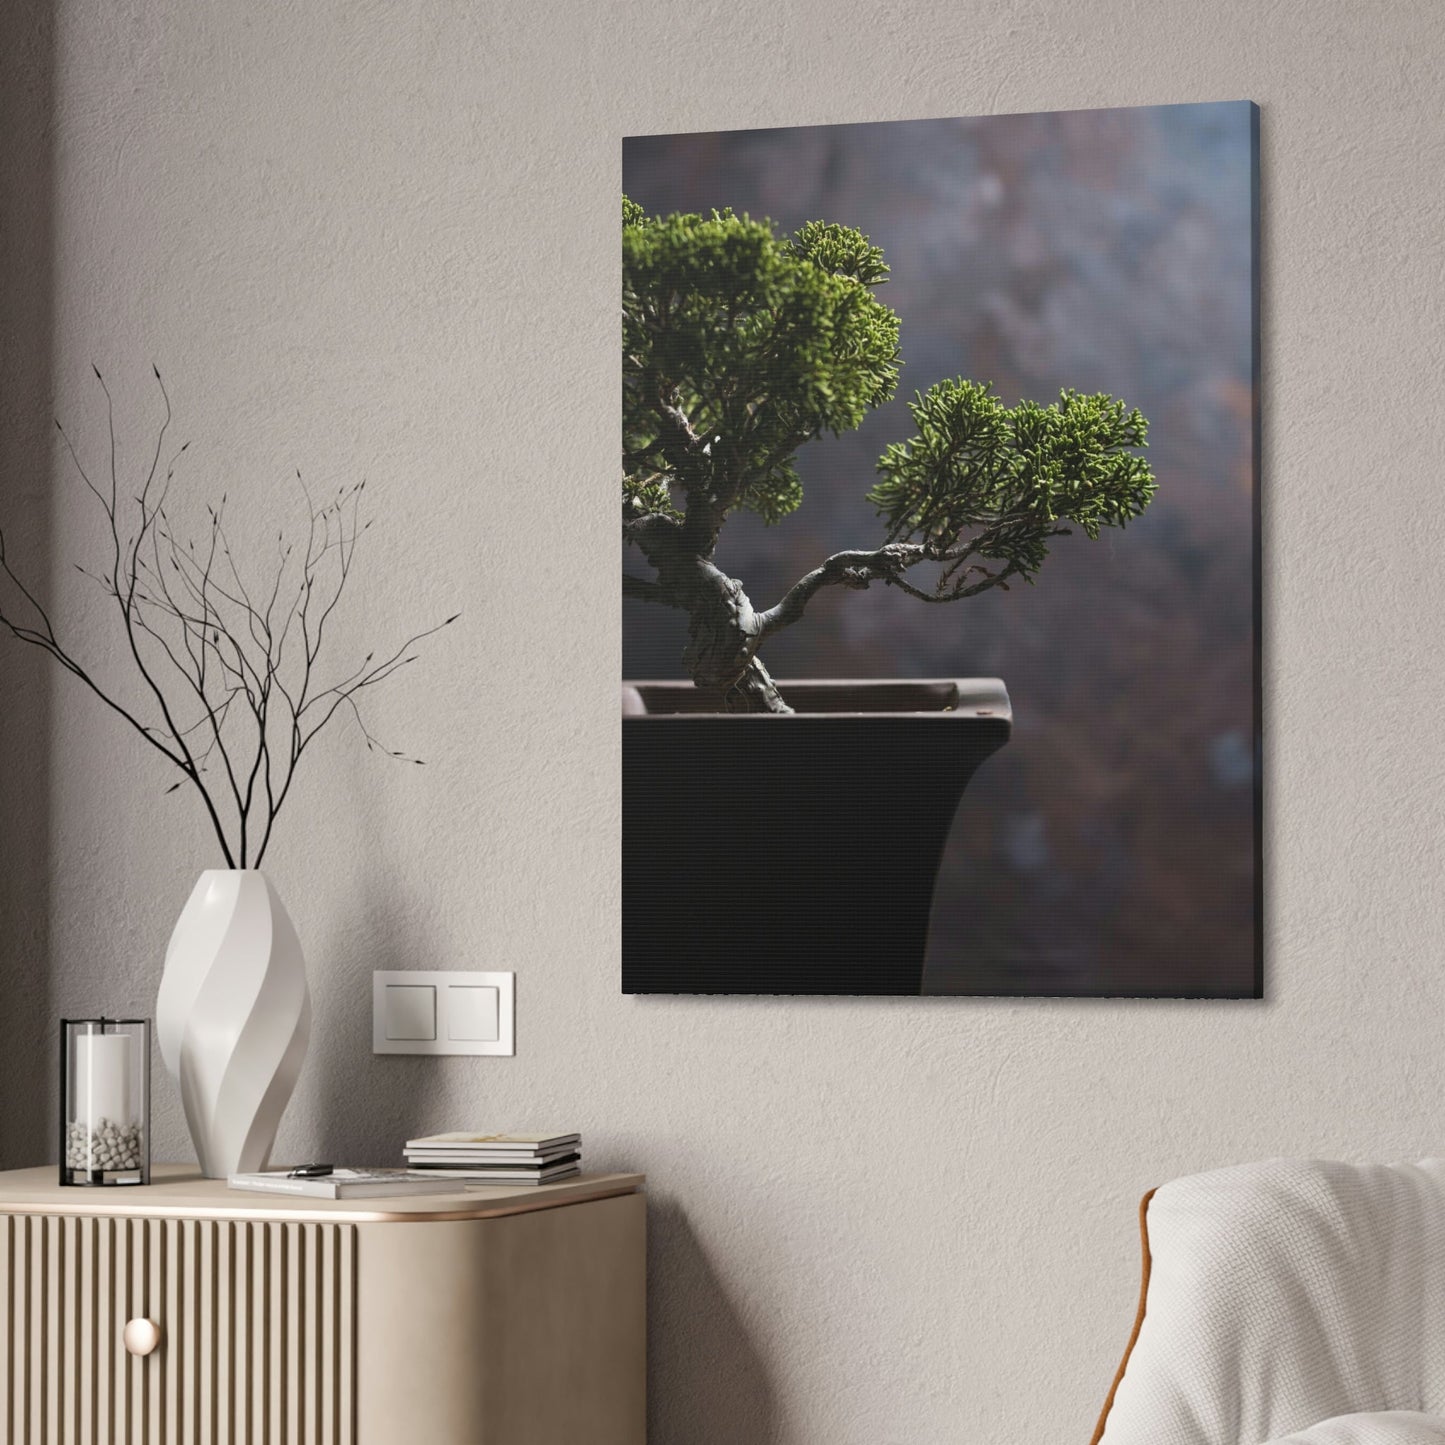 Bonsai Harmony: Framed Canvas and Print with Balanced Bonsai Tree Art